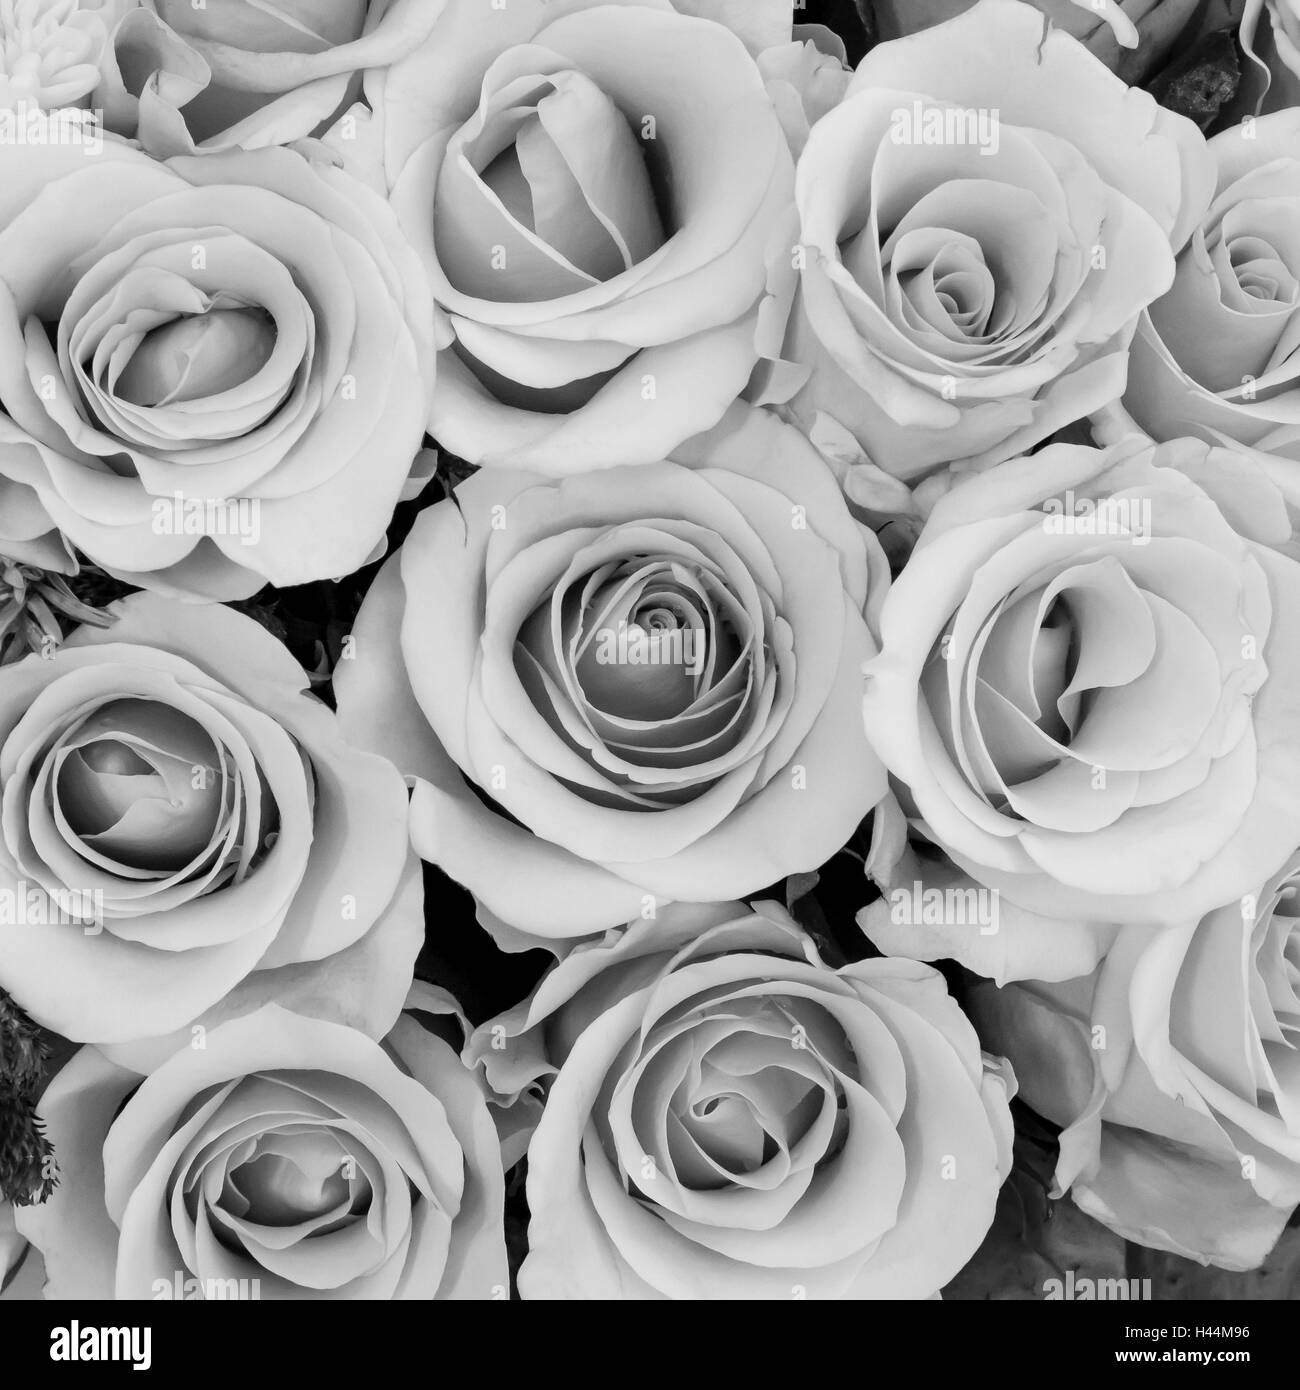 Featured image of post Rose Hintergrundbild Schwarz Wei Schone schwarze rosen schwarze rosen schwarzweiss hintergrund